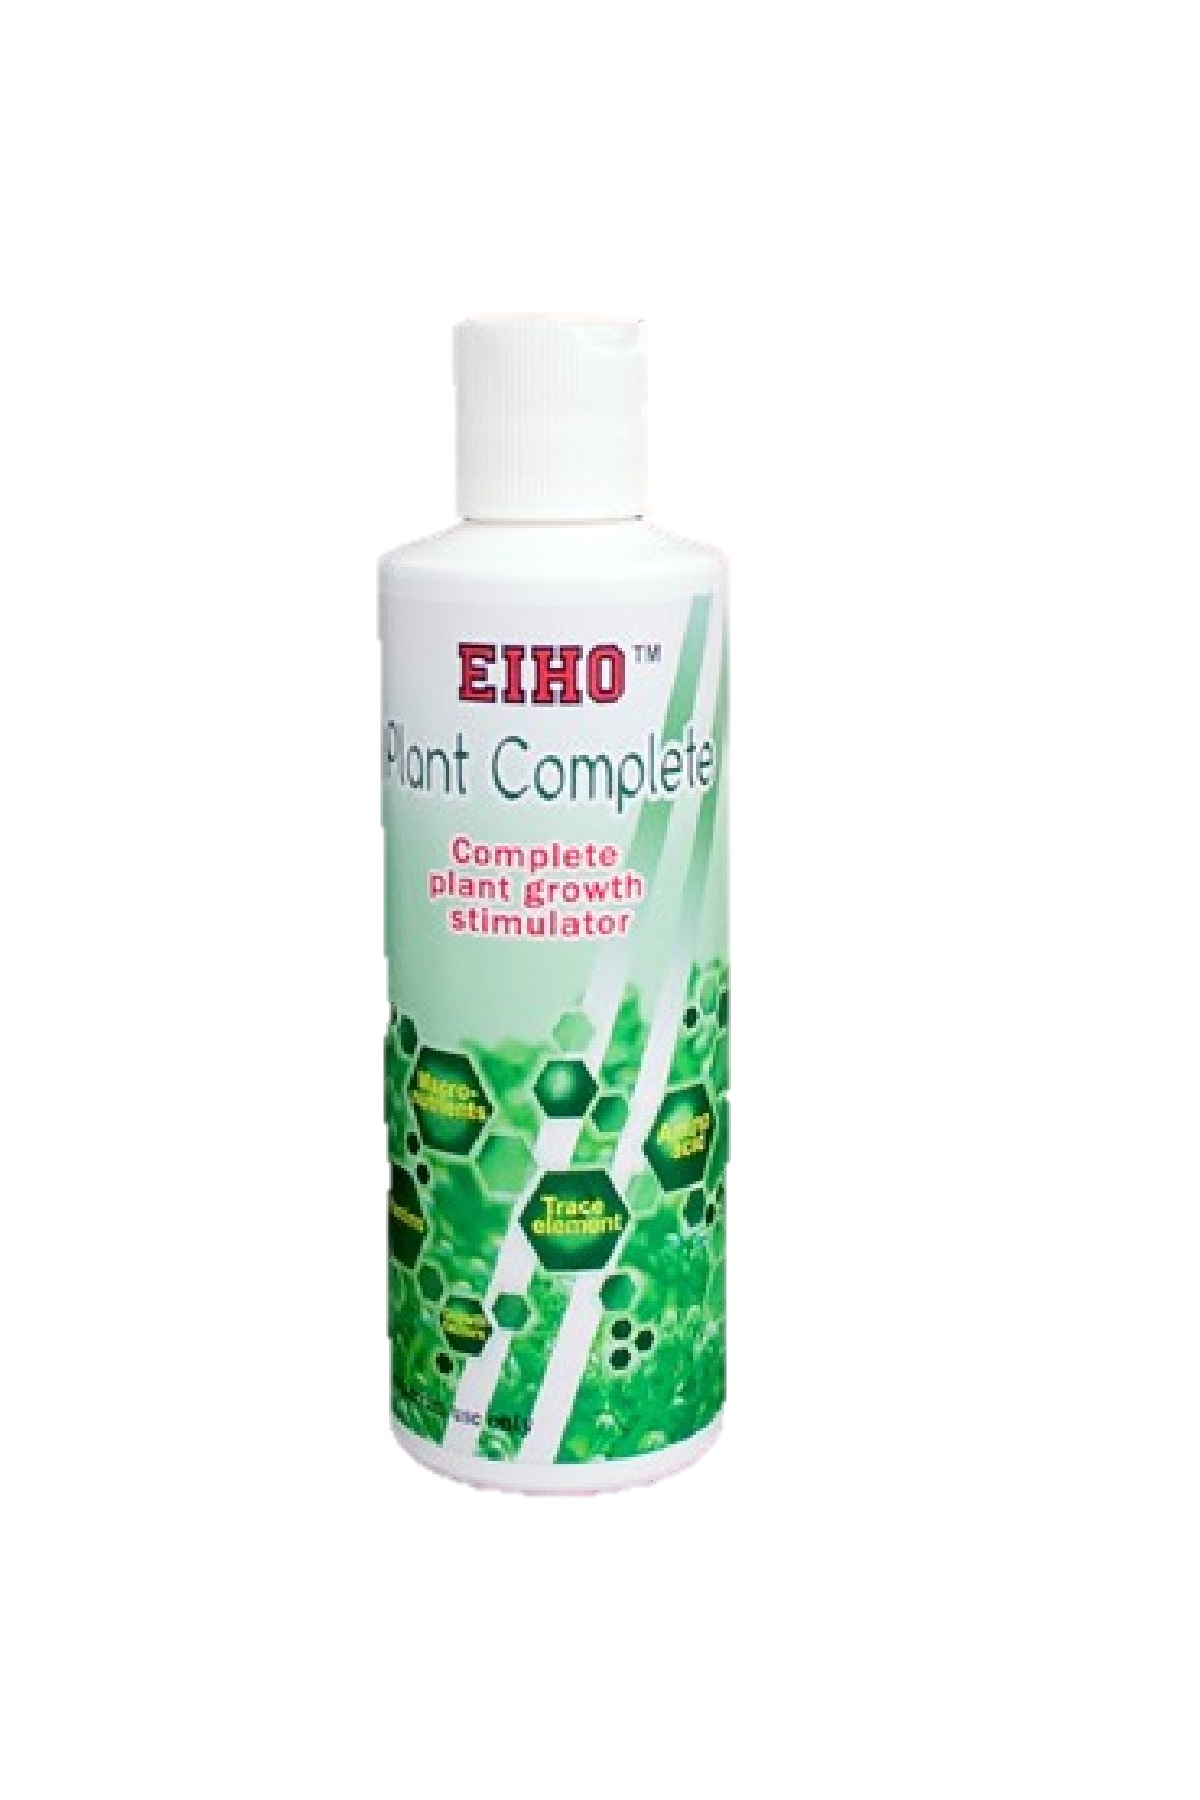 EIHO Plant Complete